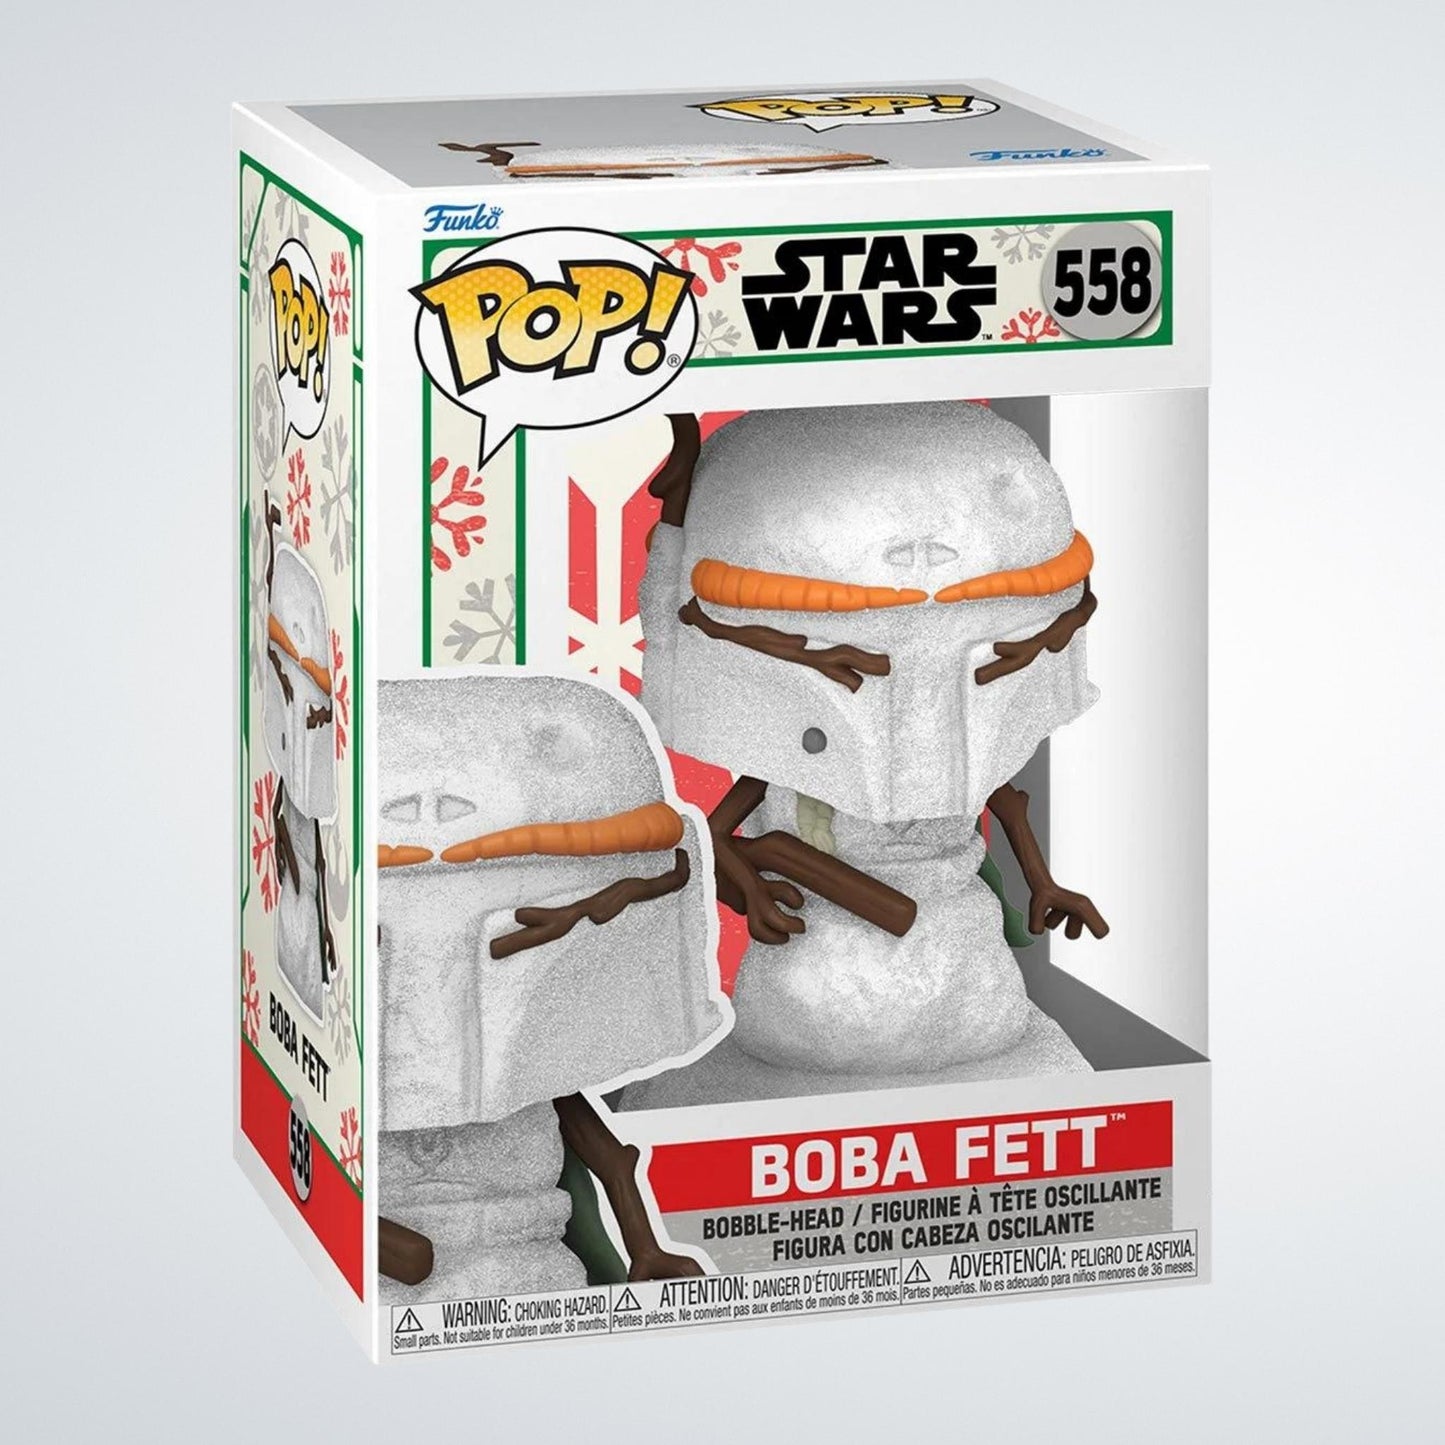 Load image into Gallery viewer, Boba Fett Snowman (Star Wars) Holiday Glitter Funko Pop!
